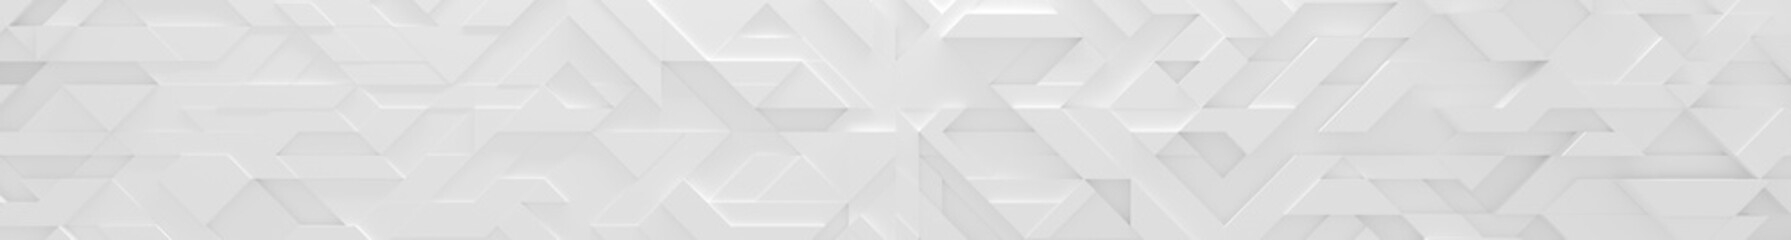 Extra-Wide White Futuristic Geometrical Background (Website Head) (3D Illustration)